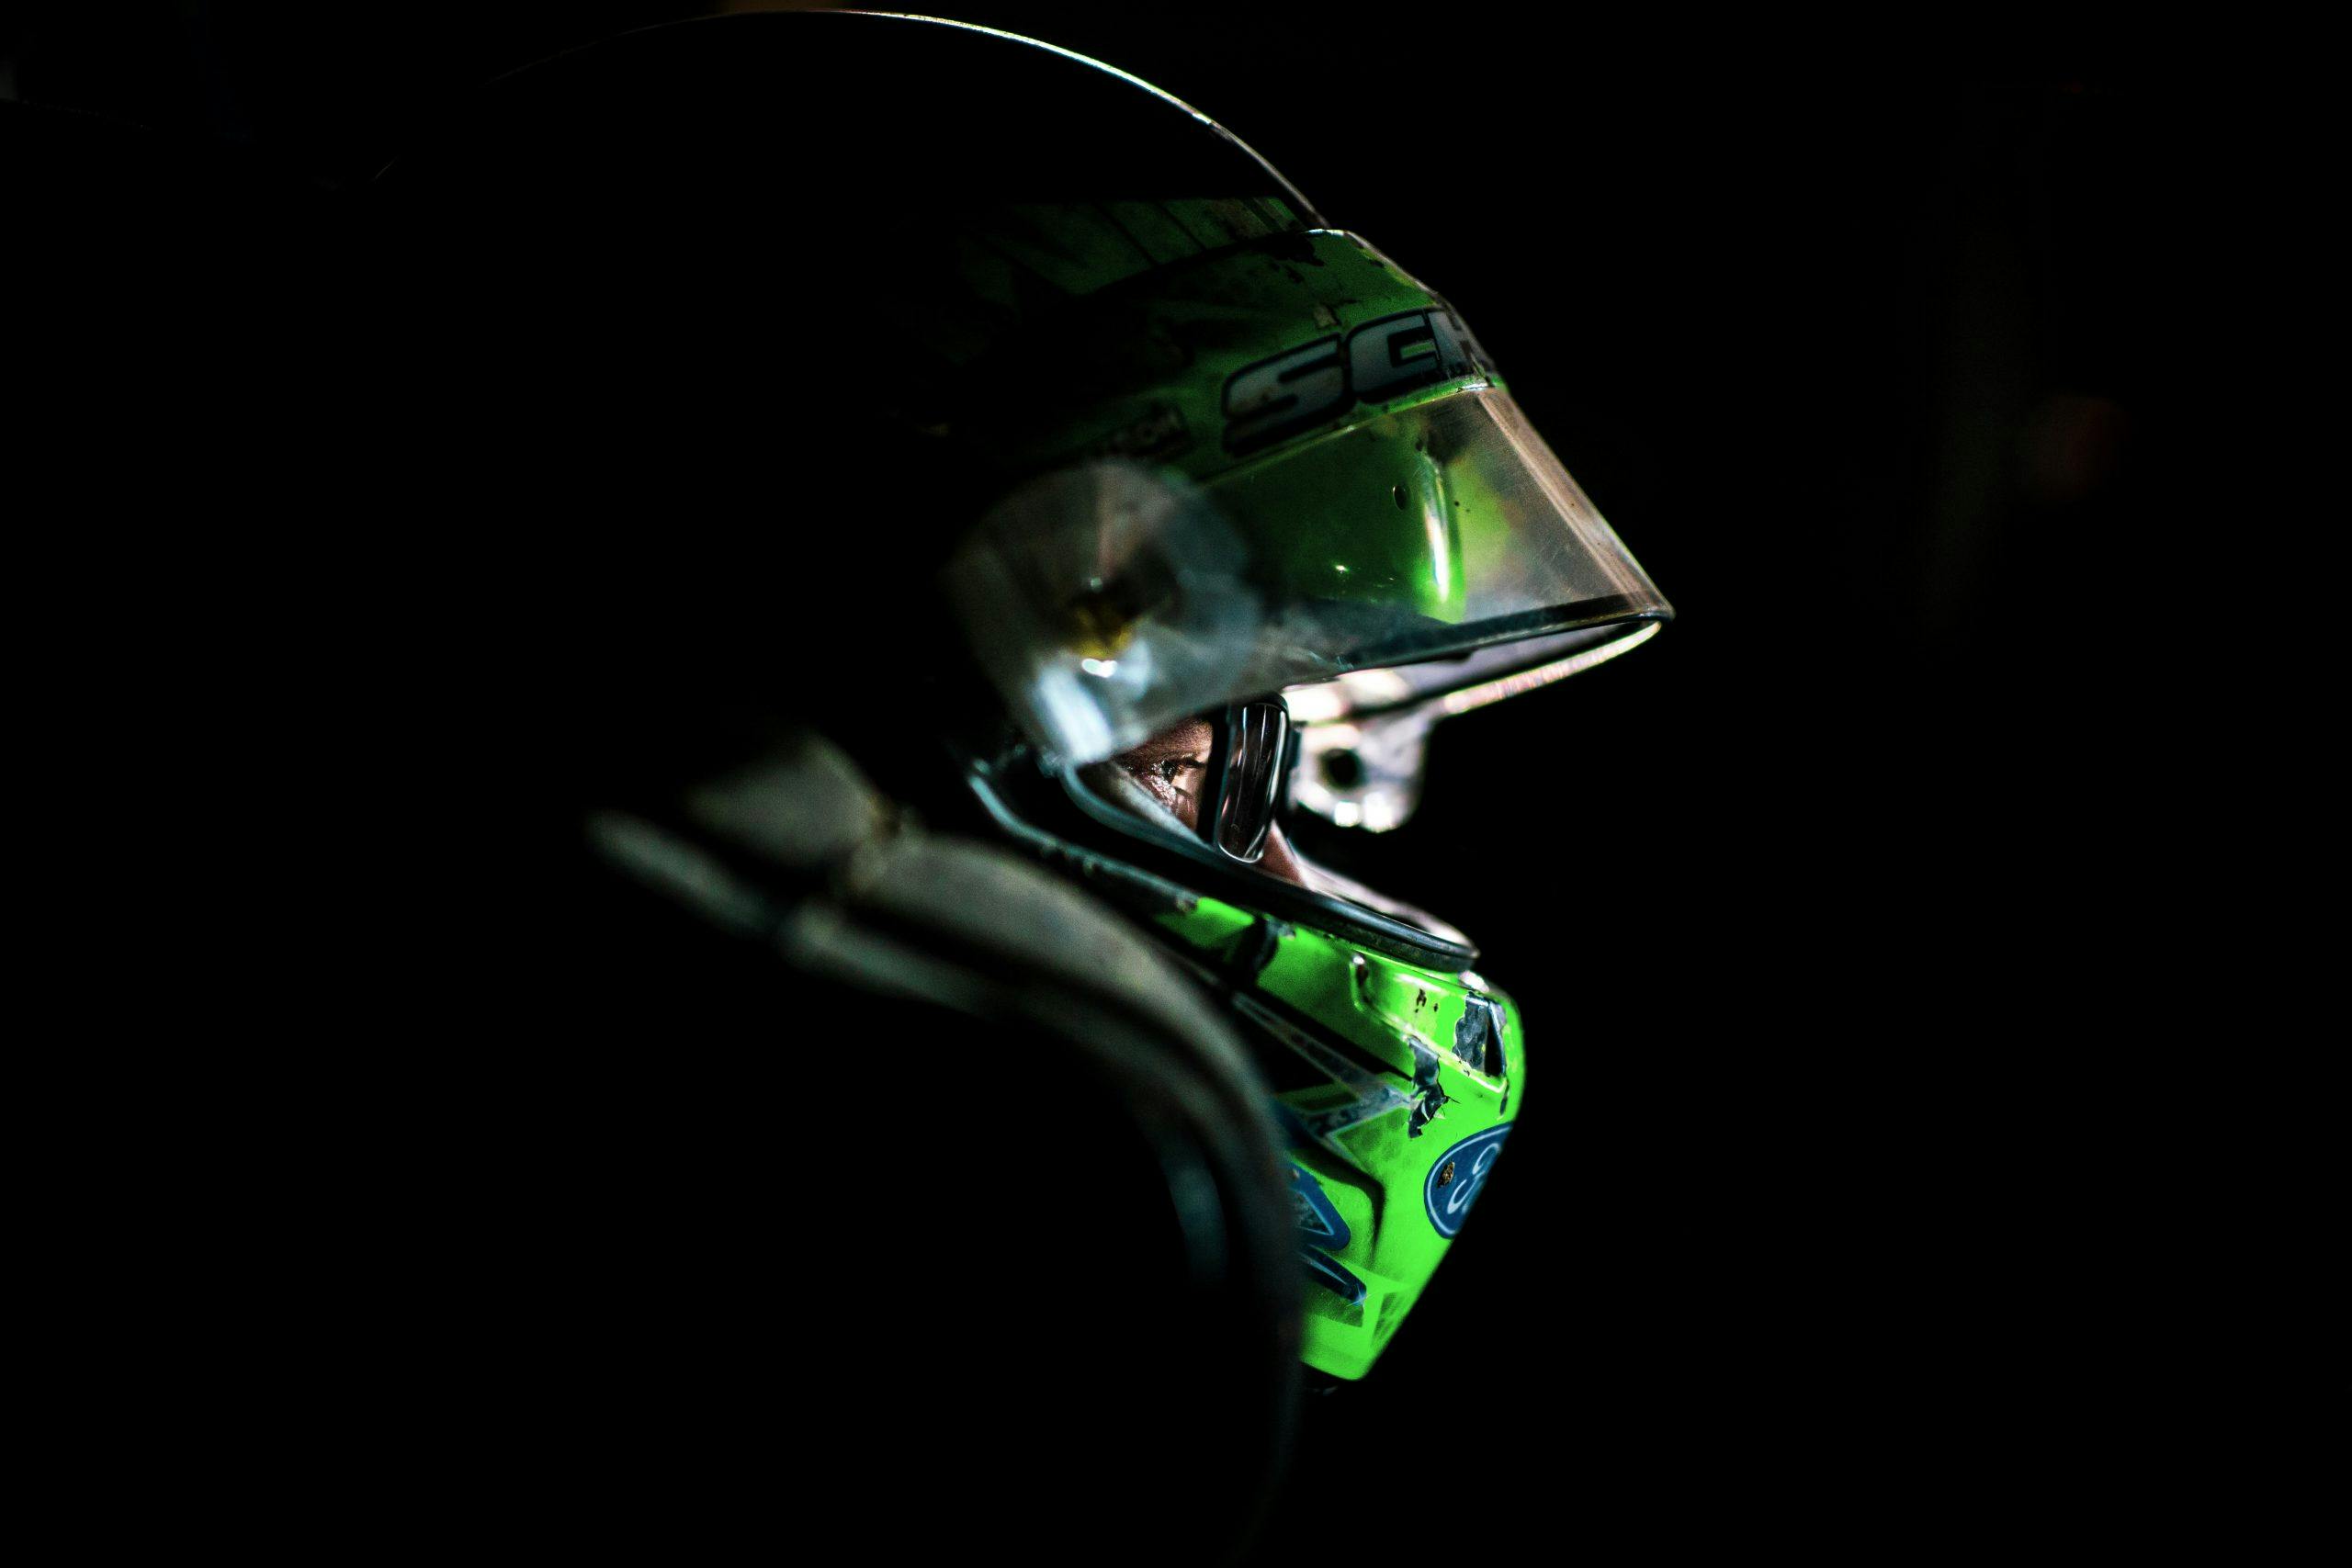 Grassroots racing driver helmet on black